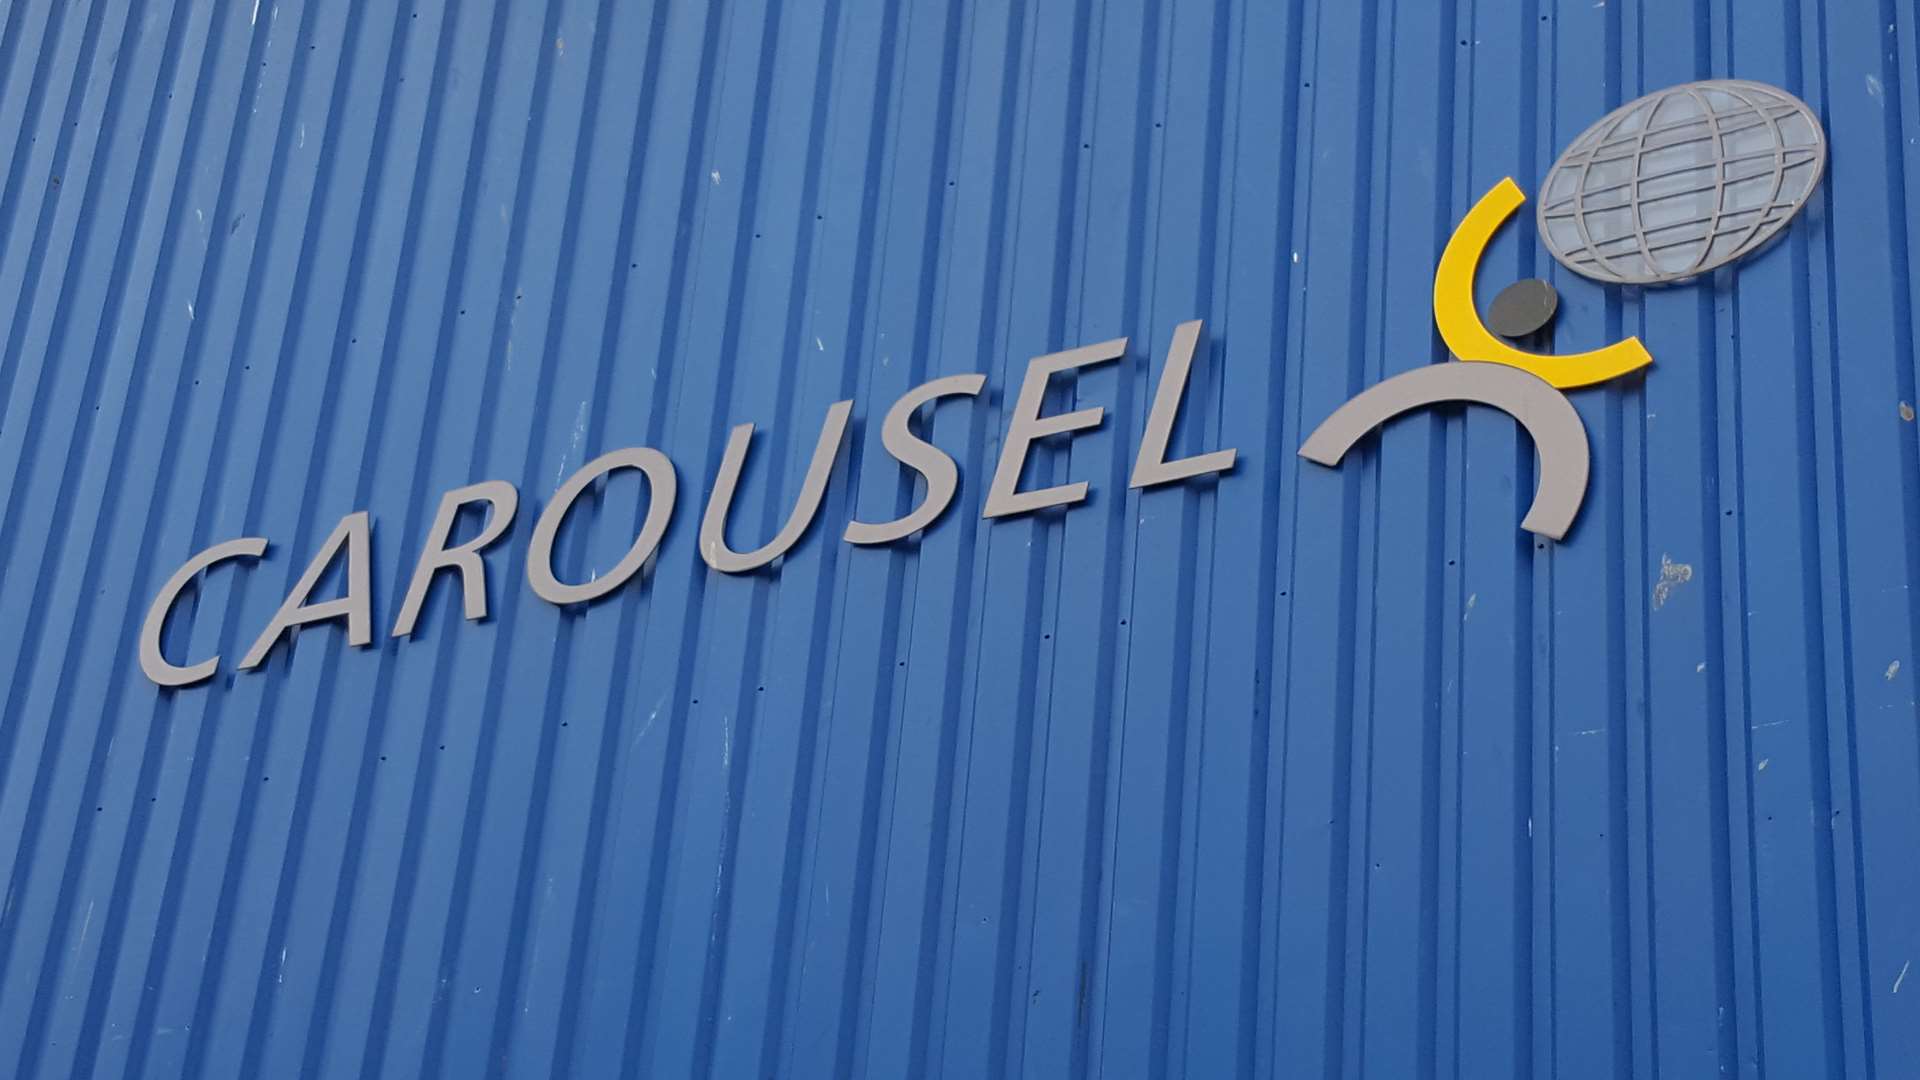 Carousel's headquarters at Eurolink Business Park in Sittingbourne